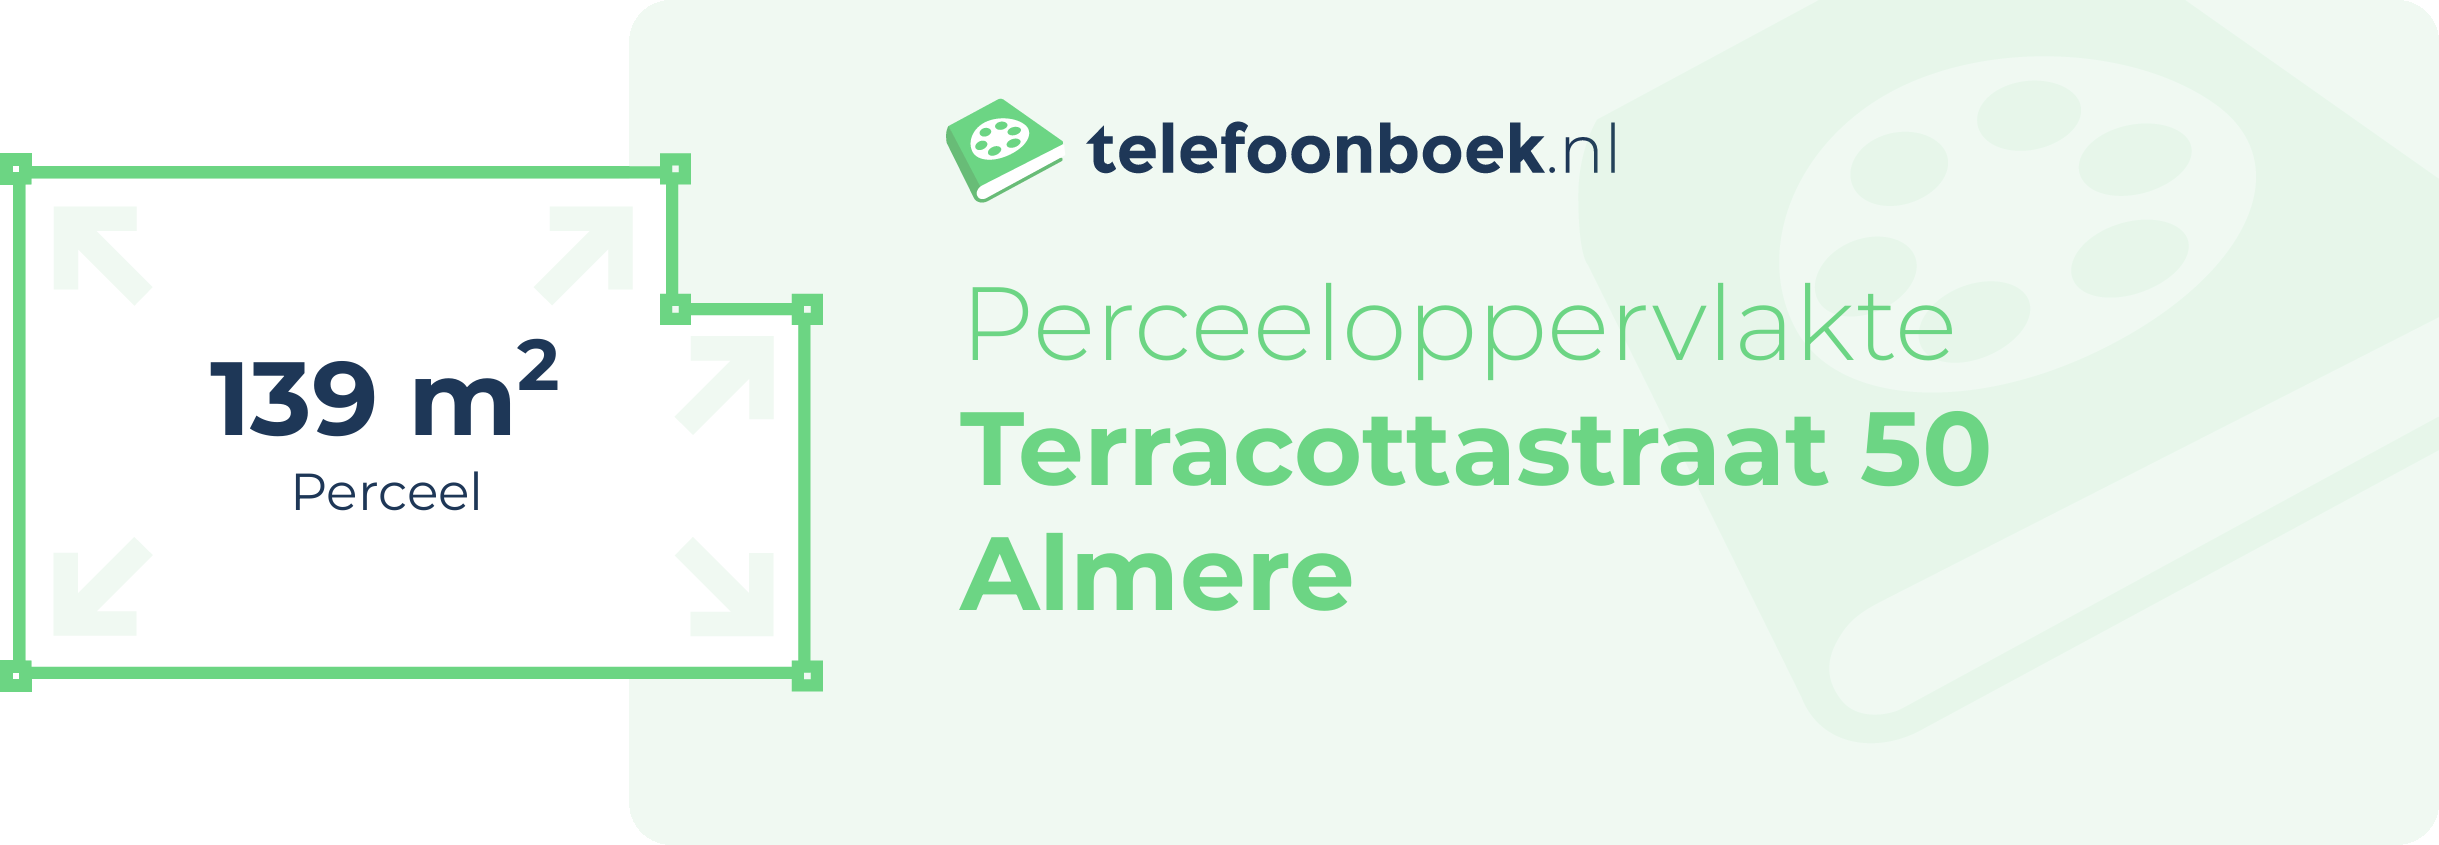 Perceeloppervlakte Terracottastraat 50 Almere